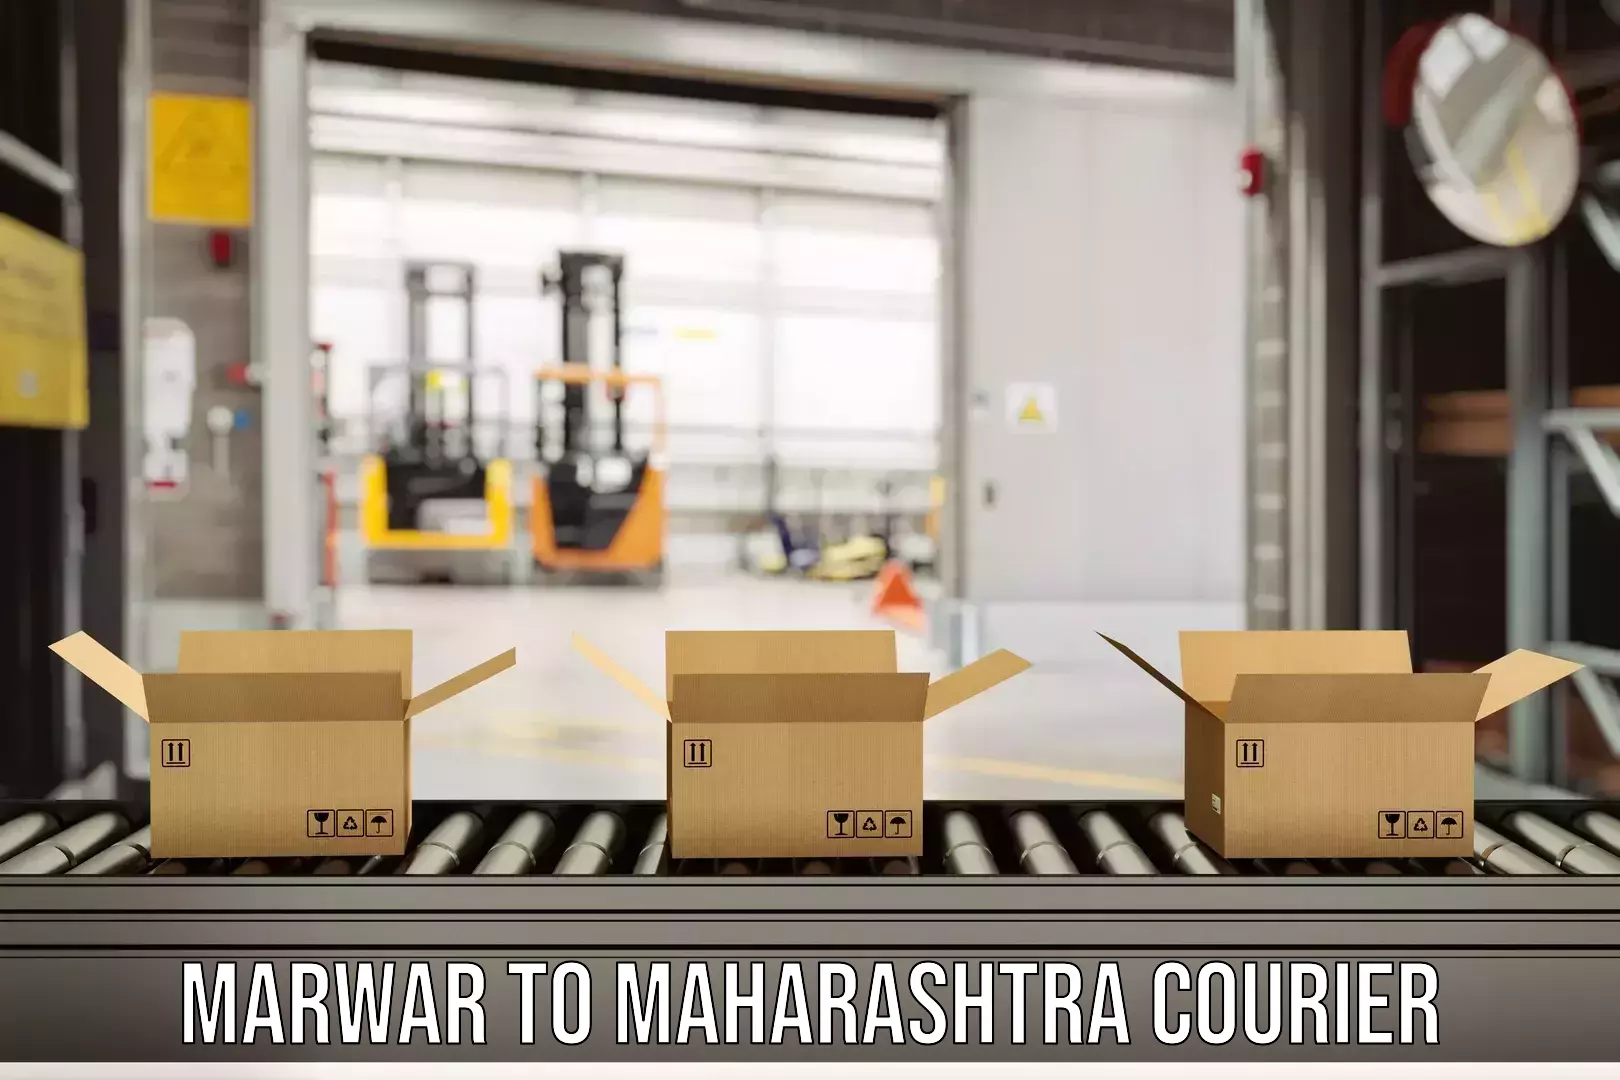 Courier service comparison Marwar to Chembur